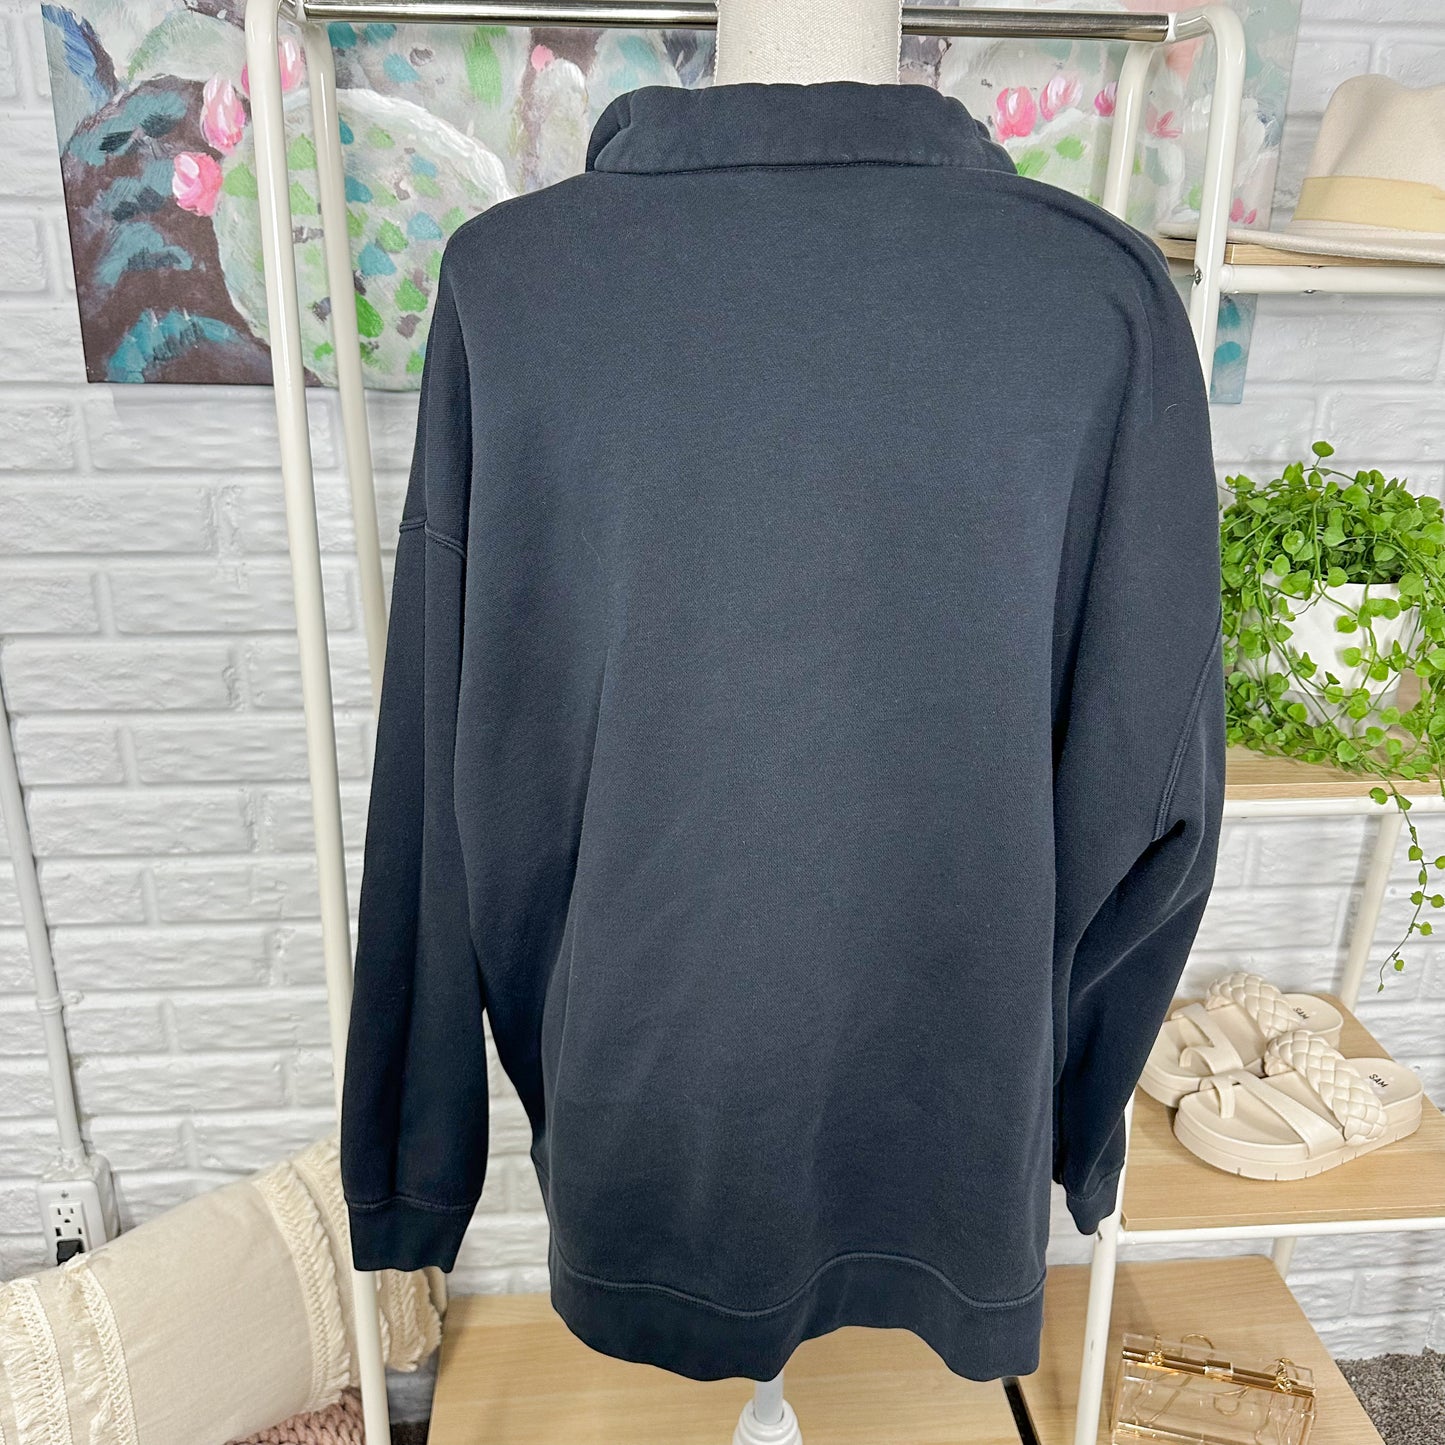 Nike Black Quarter Zip Pullover Sweatshirt Size XL